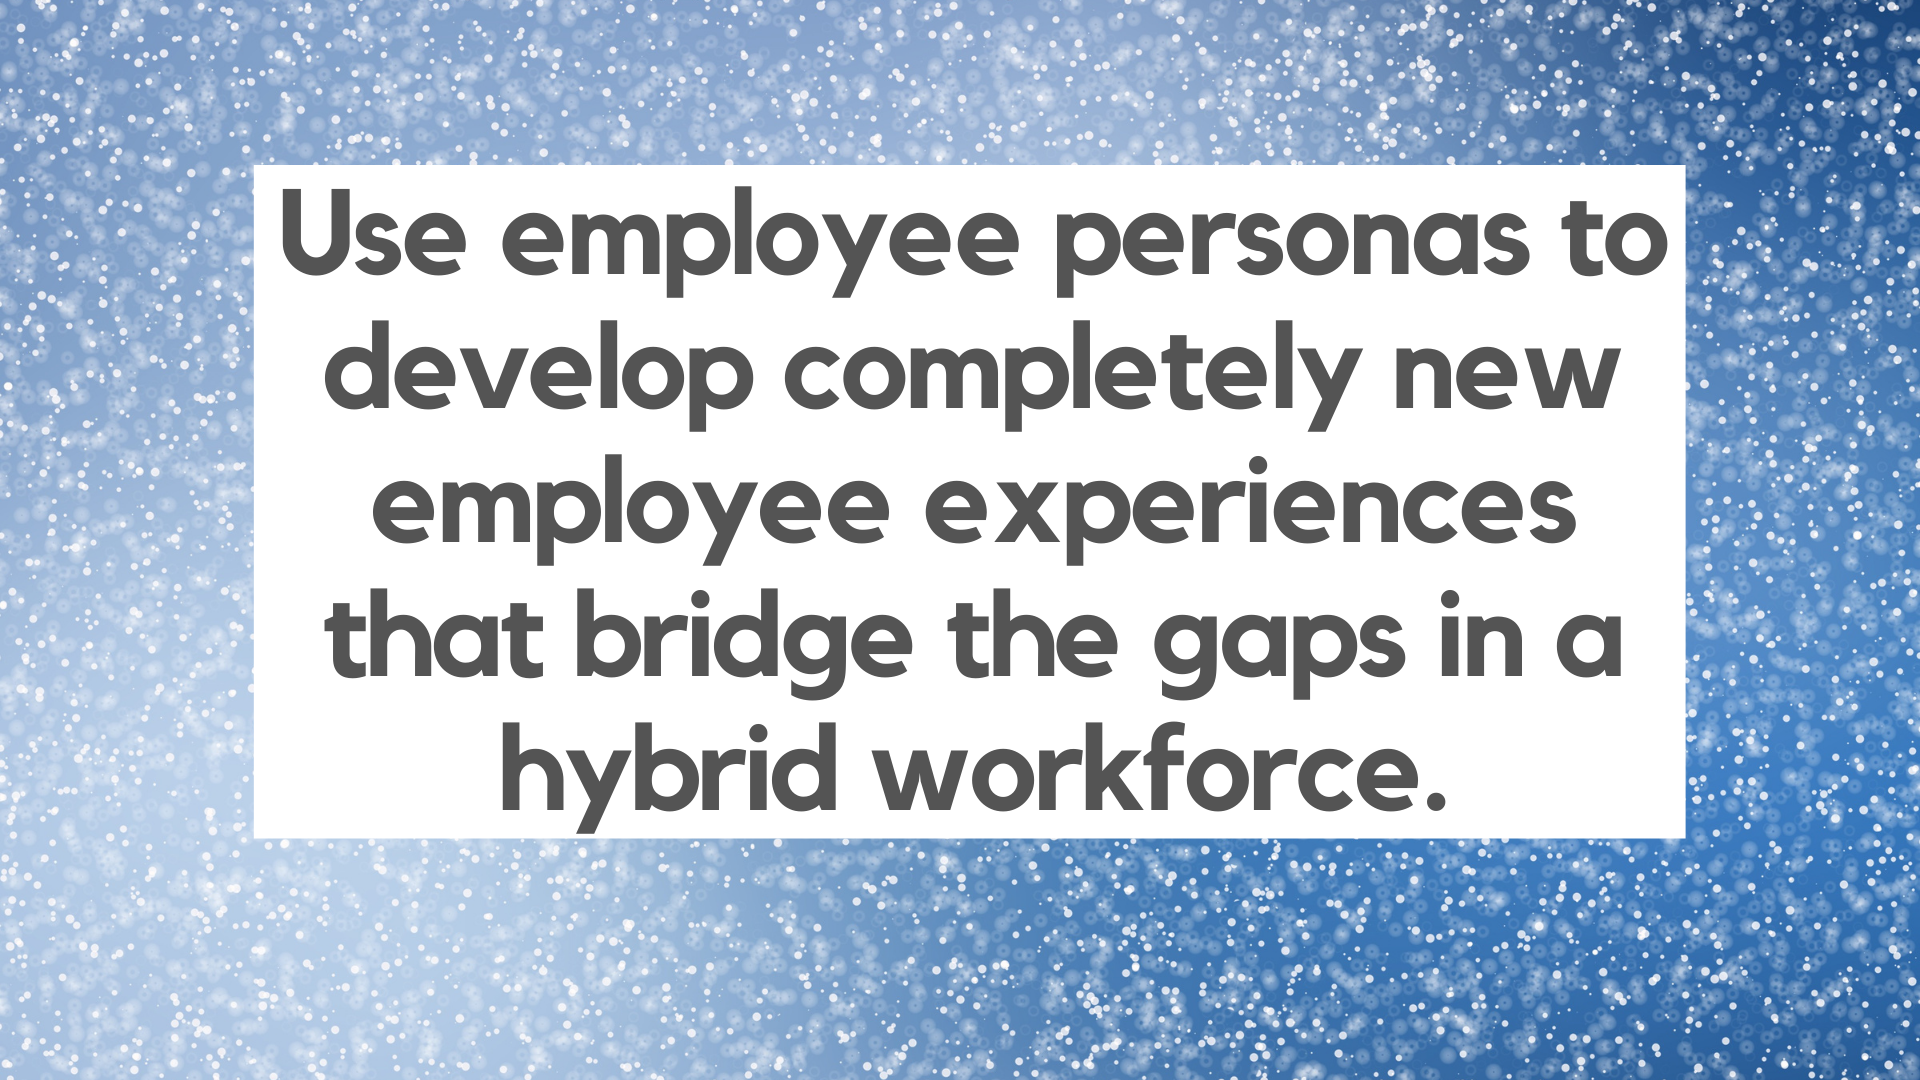 Employee Personas Help Companies Go Hybrid